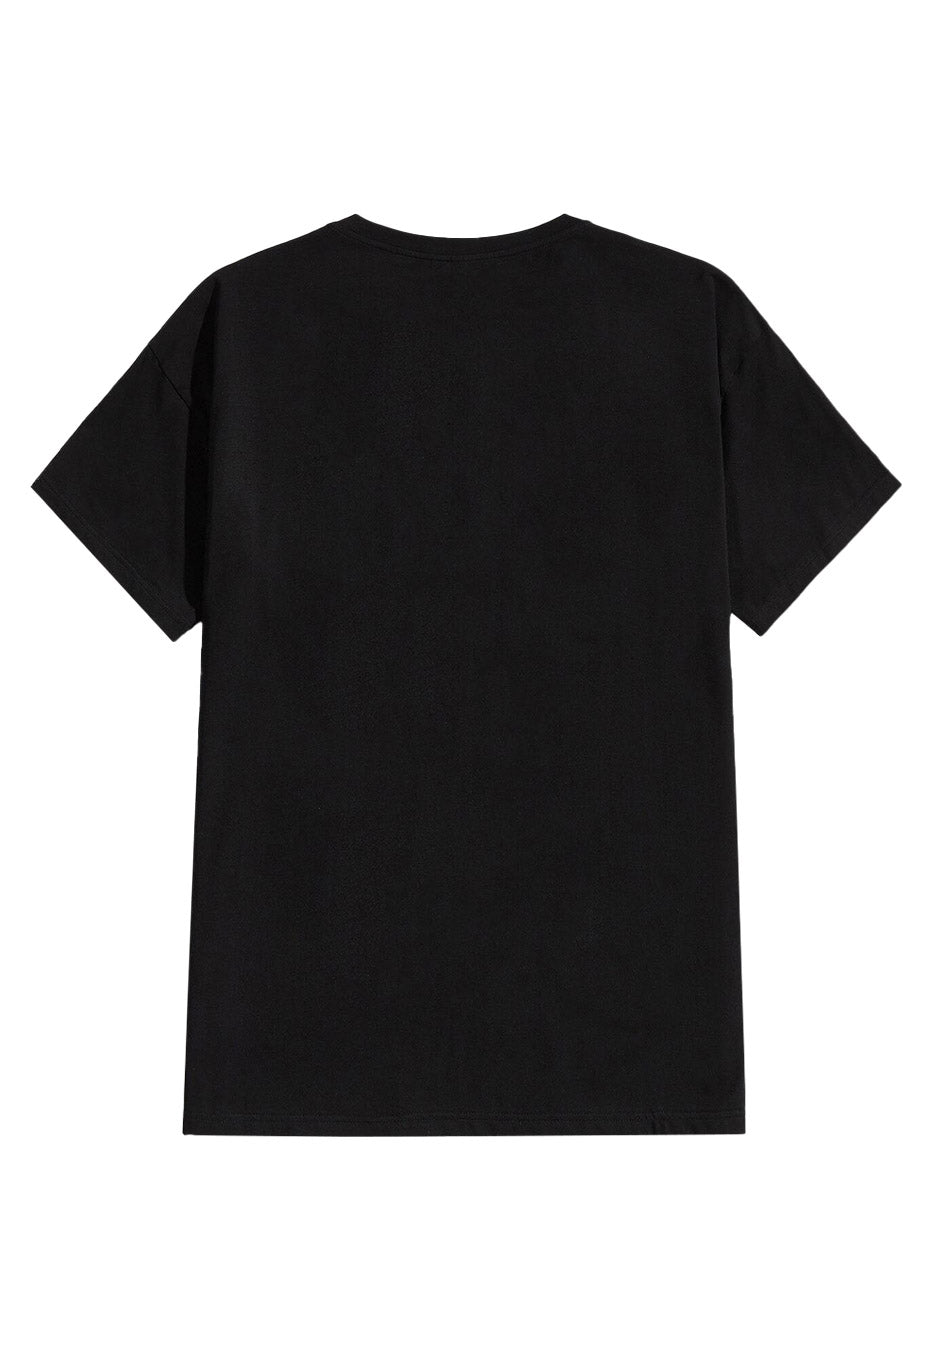 Trivium - Skelly Frame - T-Shirt | Neutral-Image